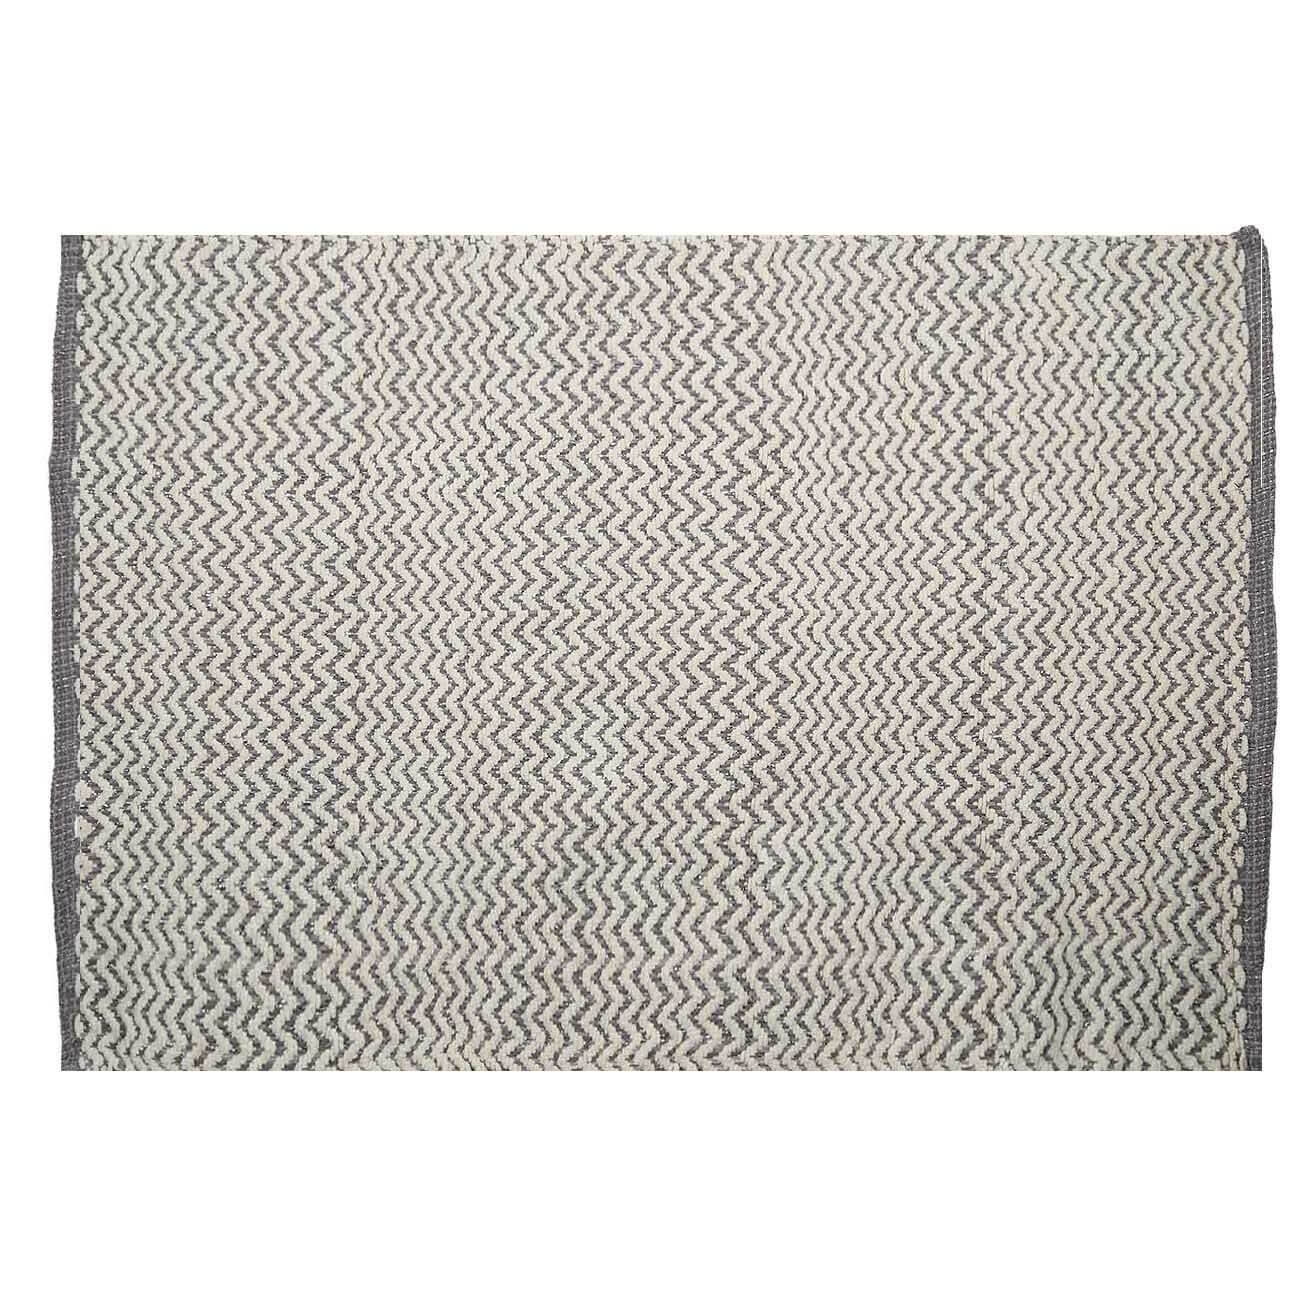 Коврик, 65х100 см, хлопок, белый, Зигзаги с люрексом, Shiny threads - фото 1